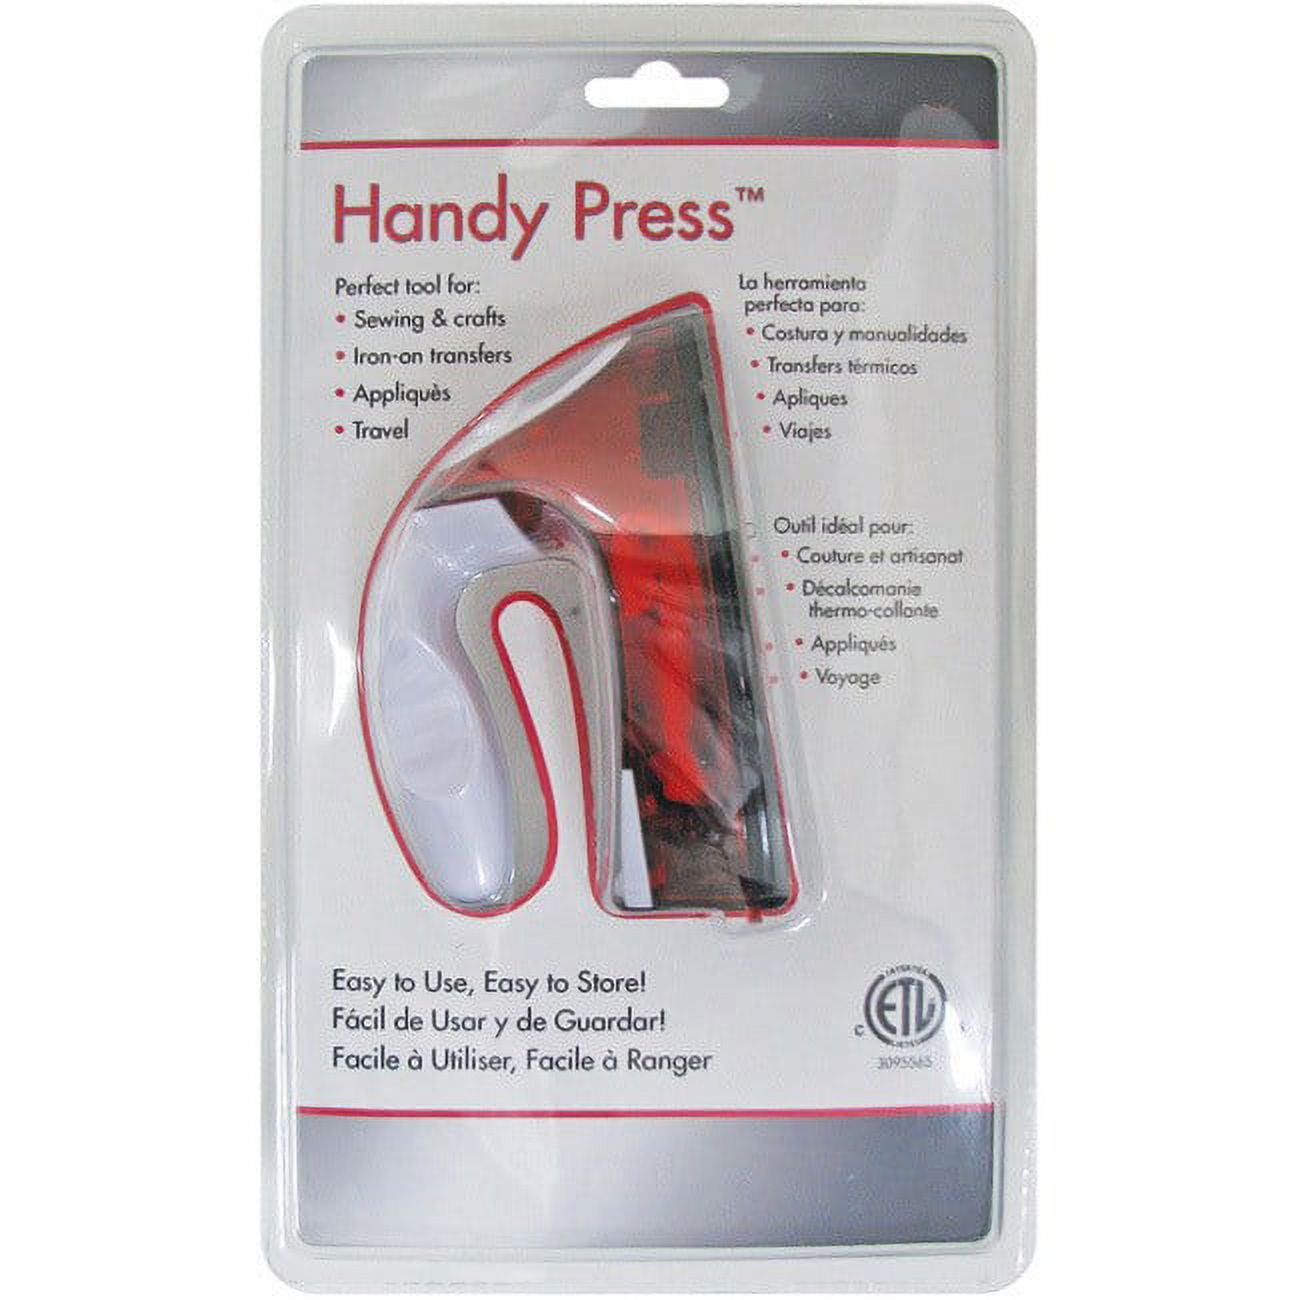 Handy Press Mini Iron, Red